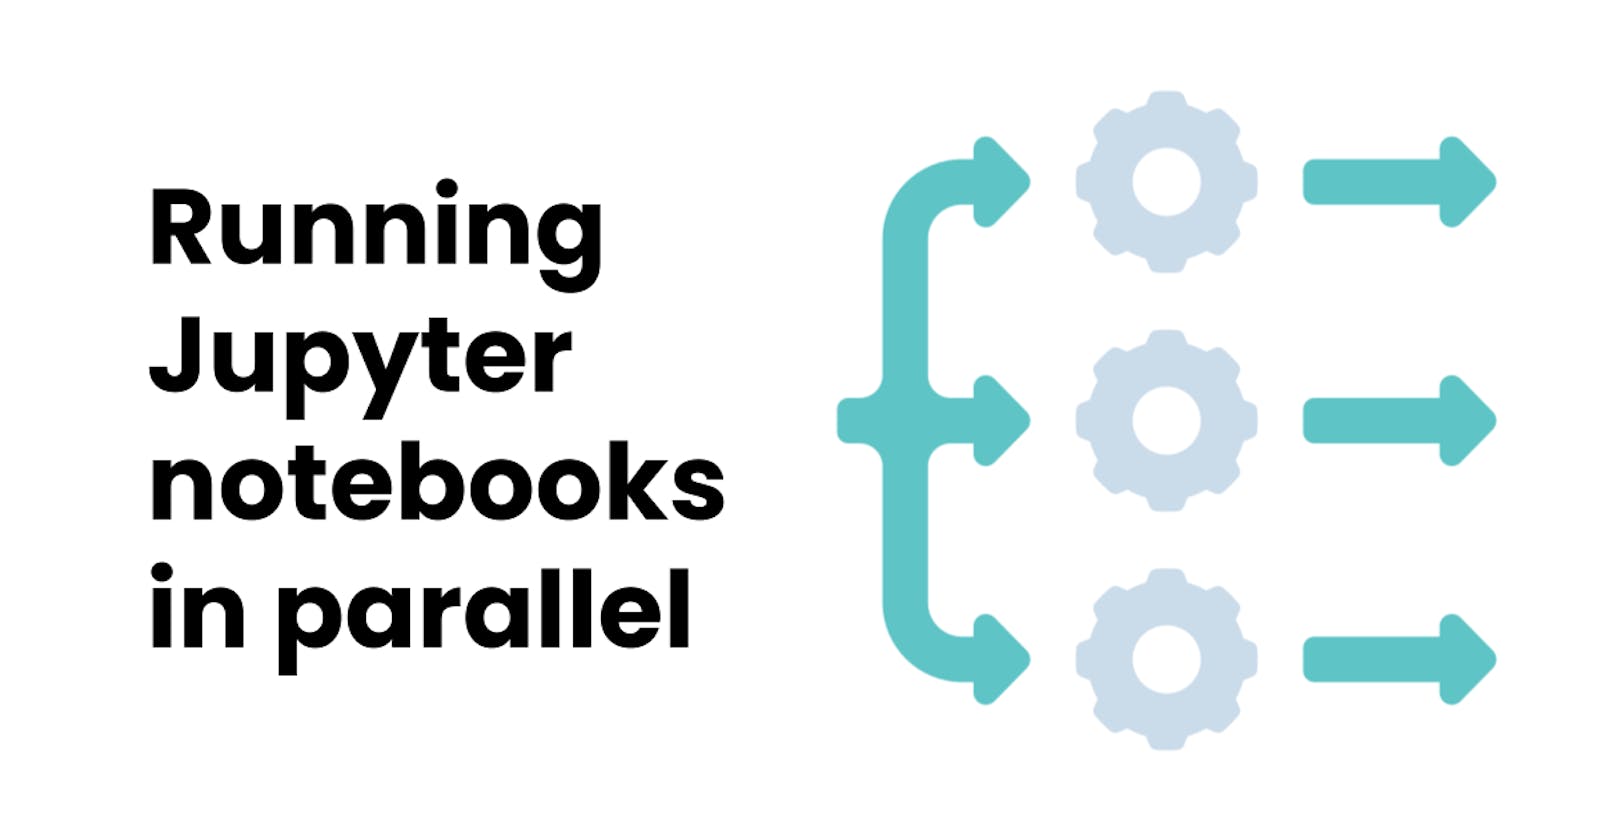 Running Jupyter notebooks in parallel